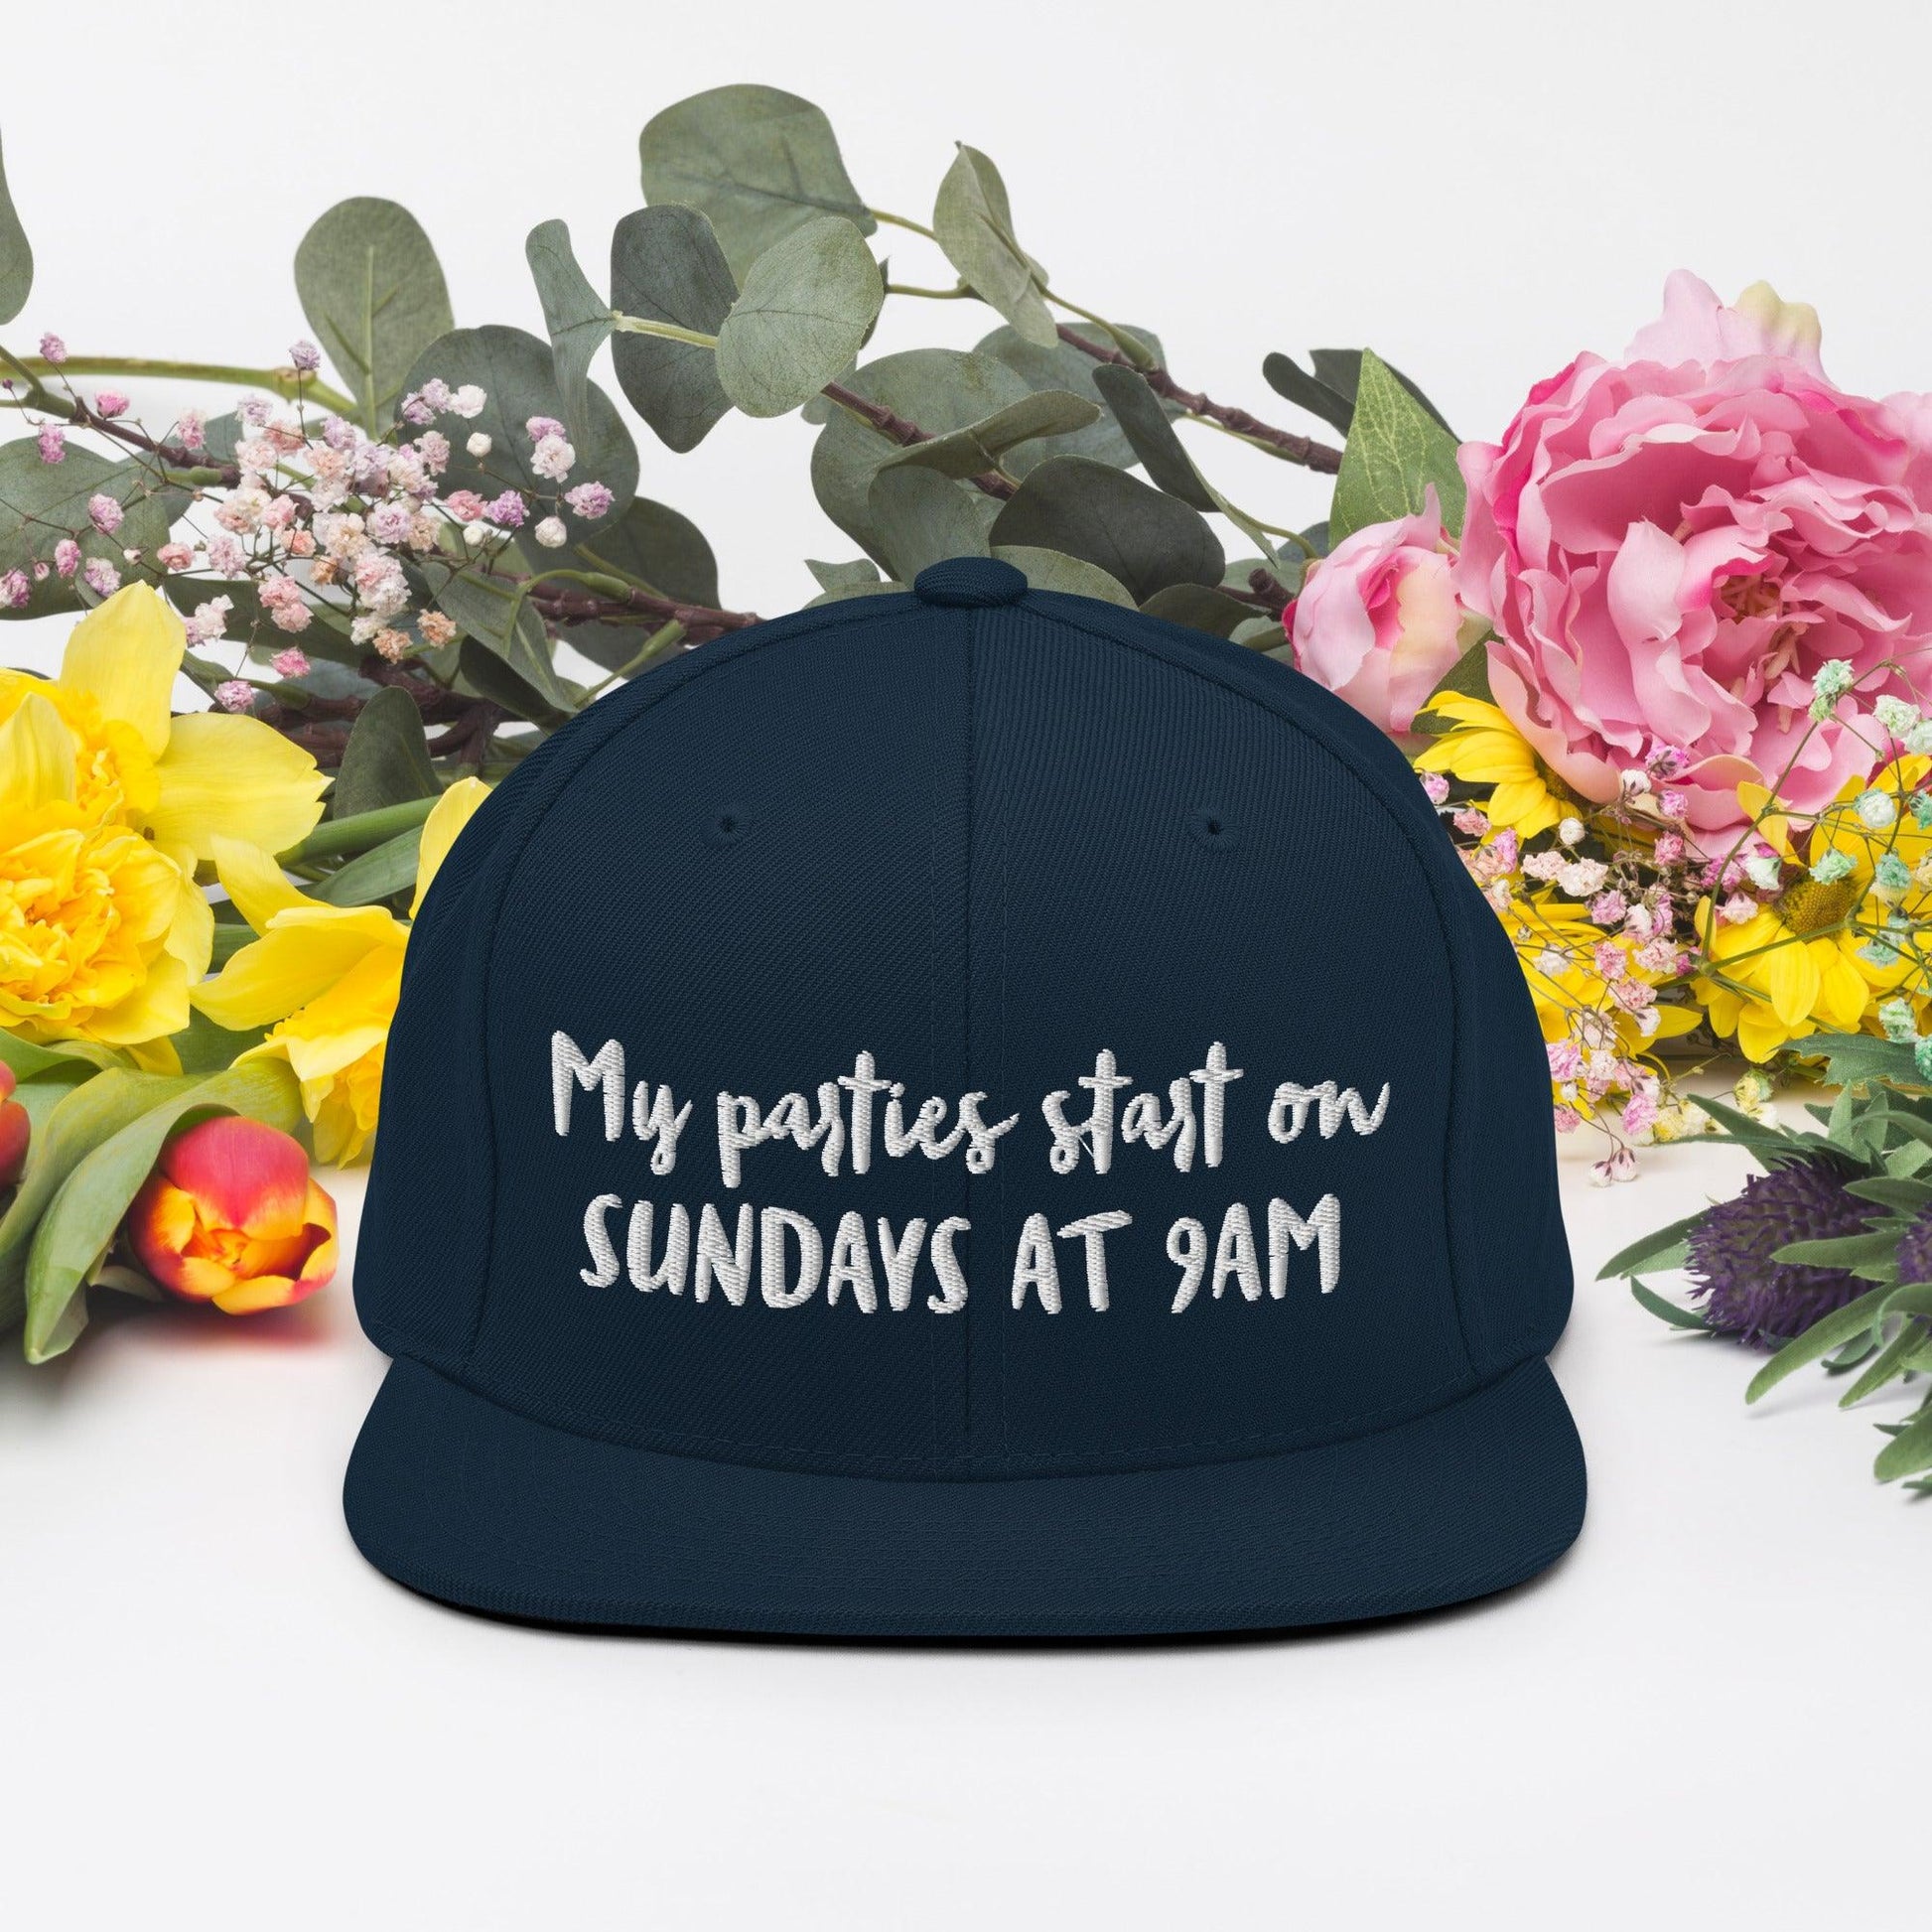 My parties start on Sundays at 9AM - Snapback Hat - CatsOnDrugs